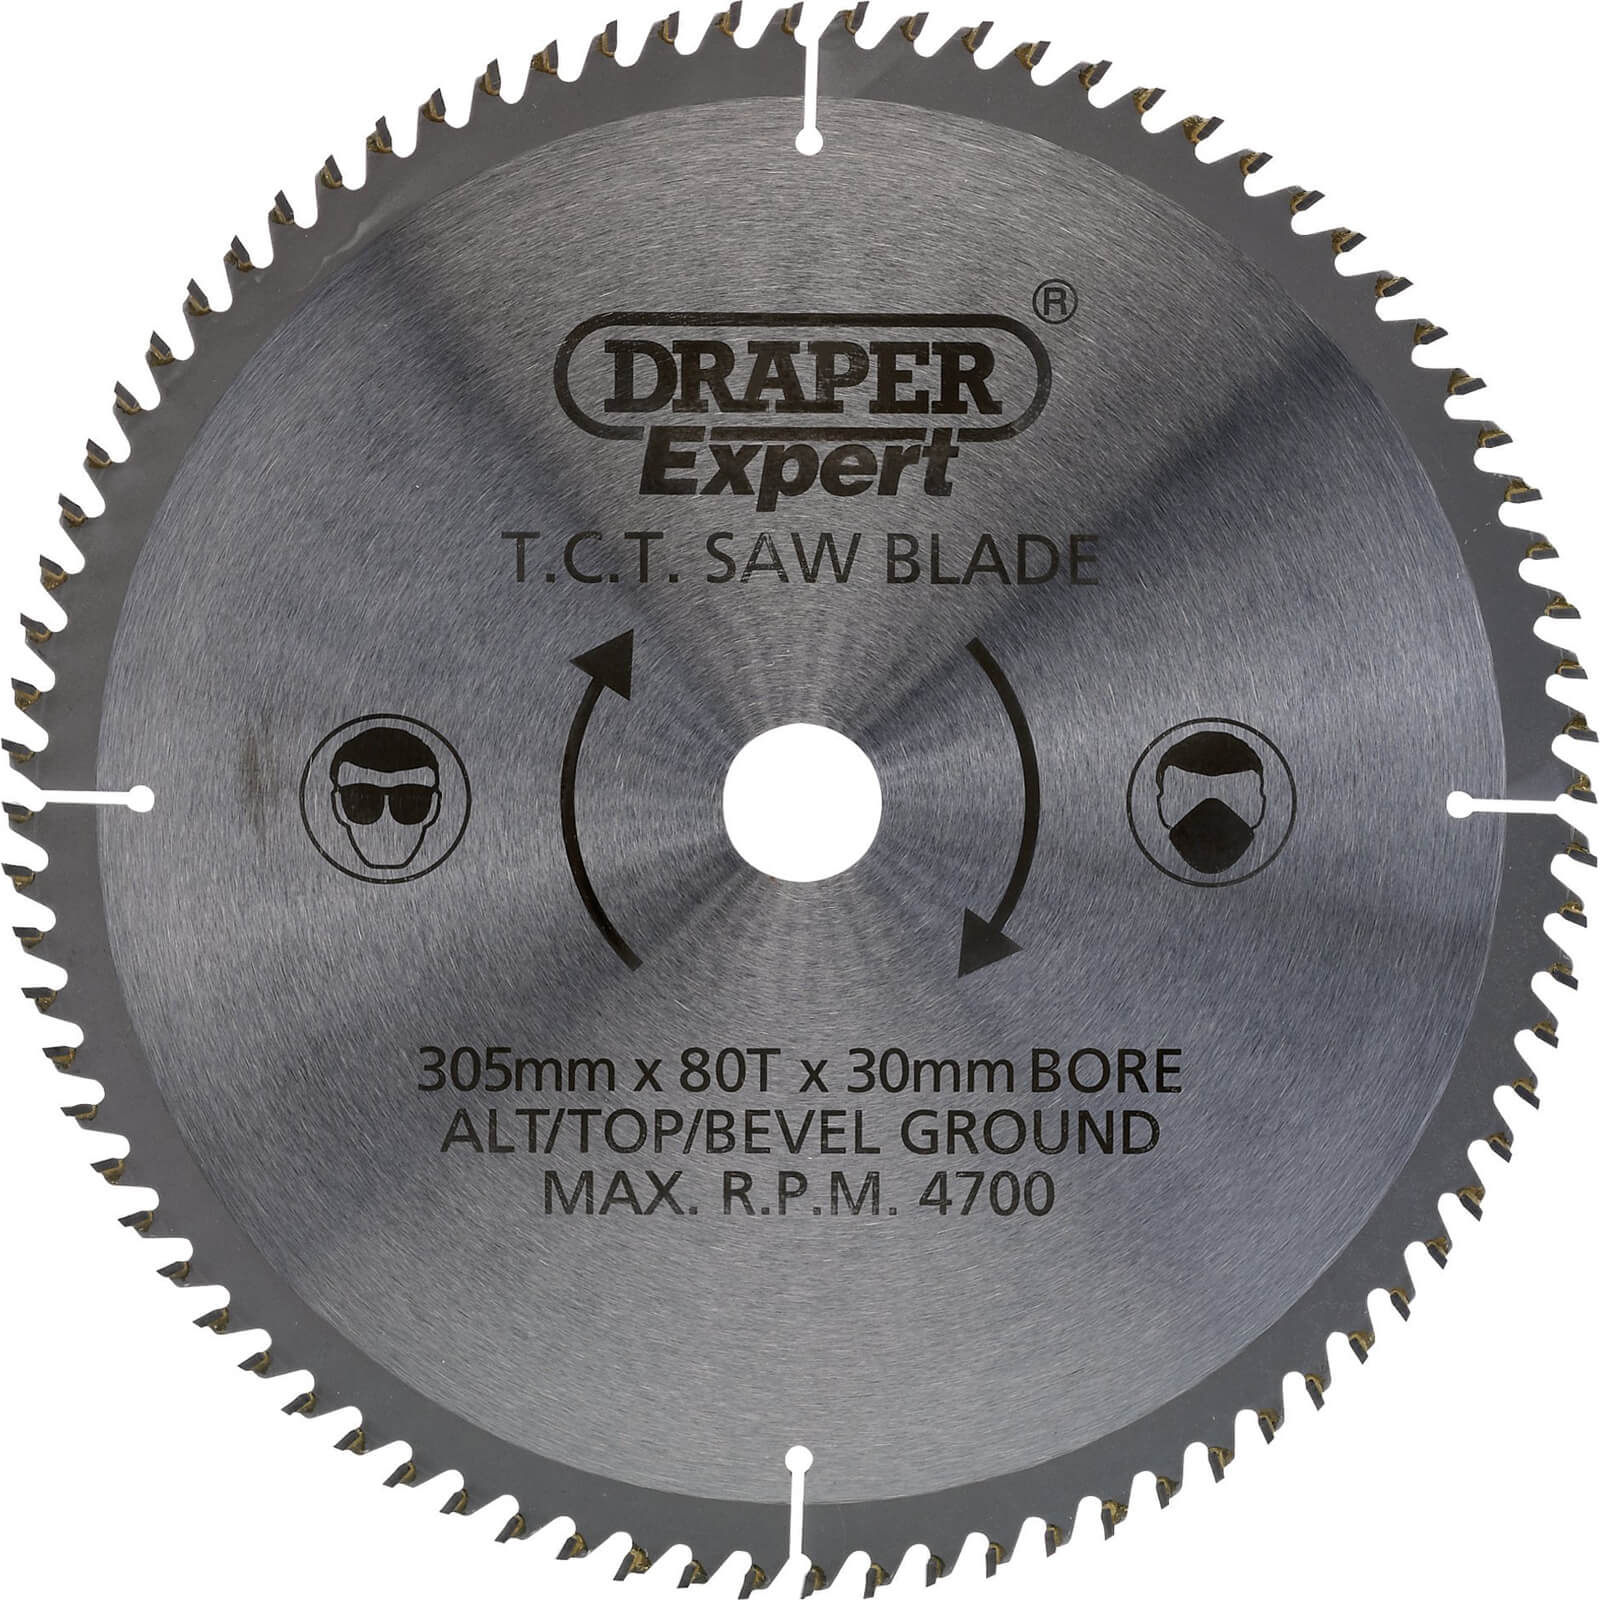 Photo of Draper Expert Circular Saw Blade 305mm 80t 30mm